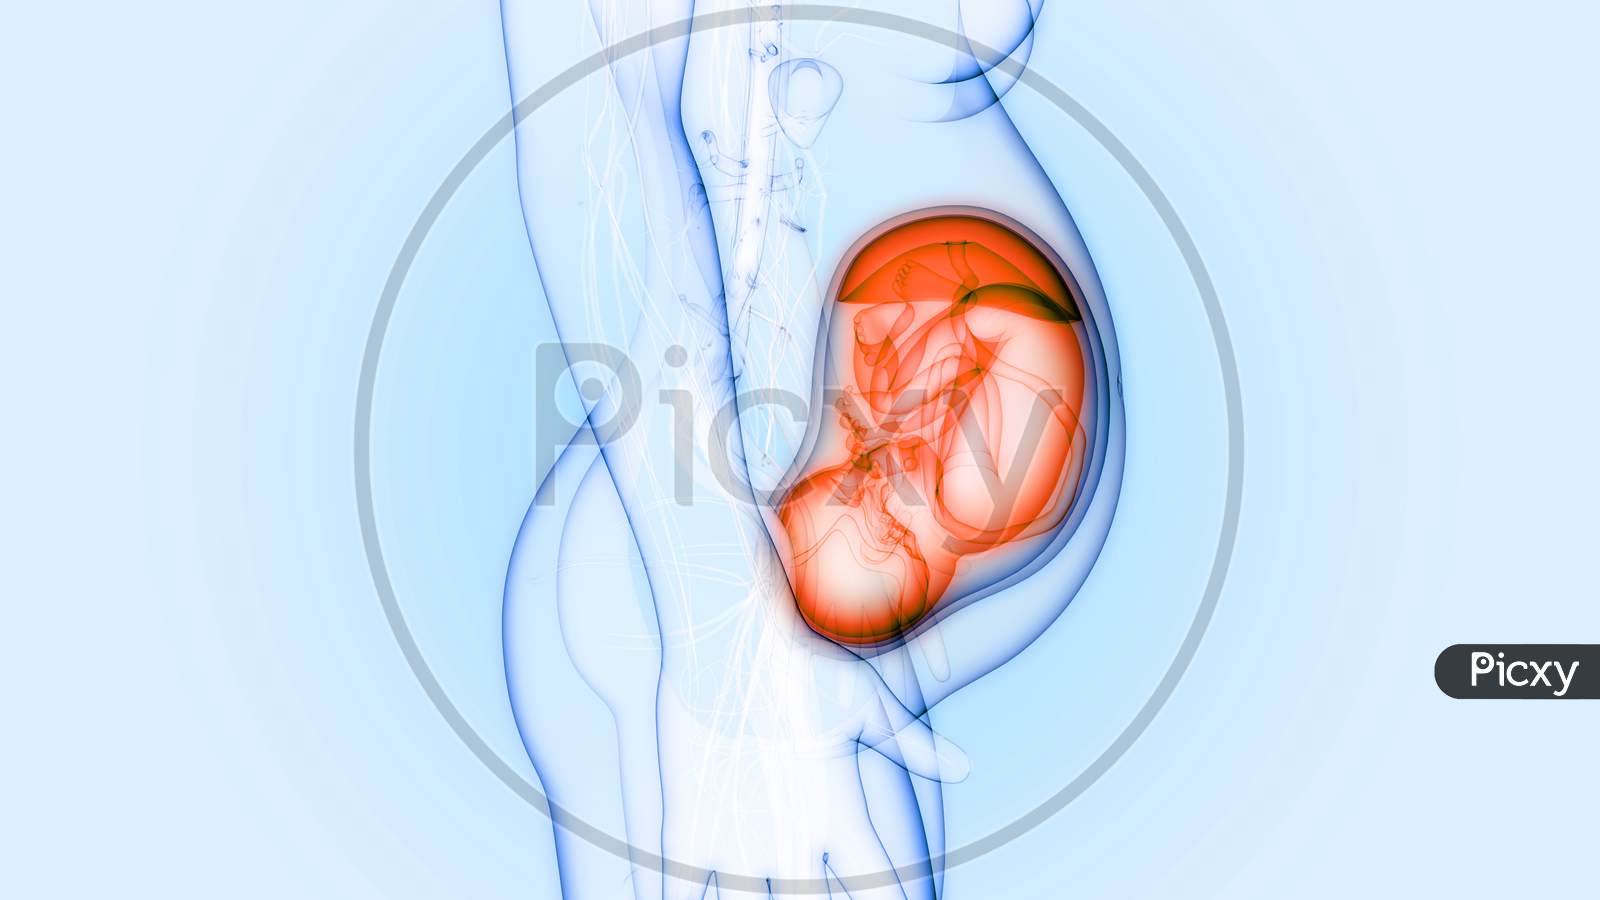 Human Fetus Baby in Womb Anatomy